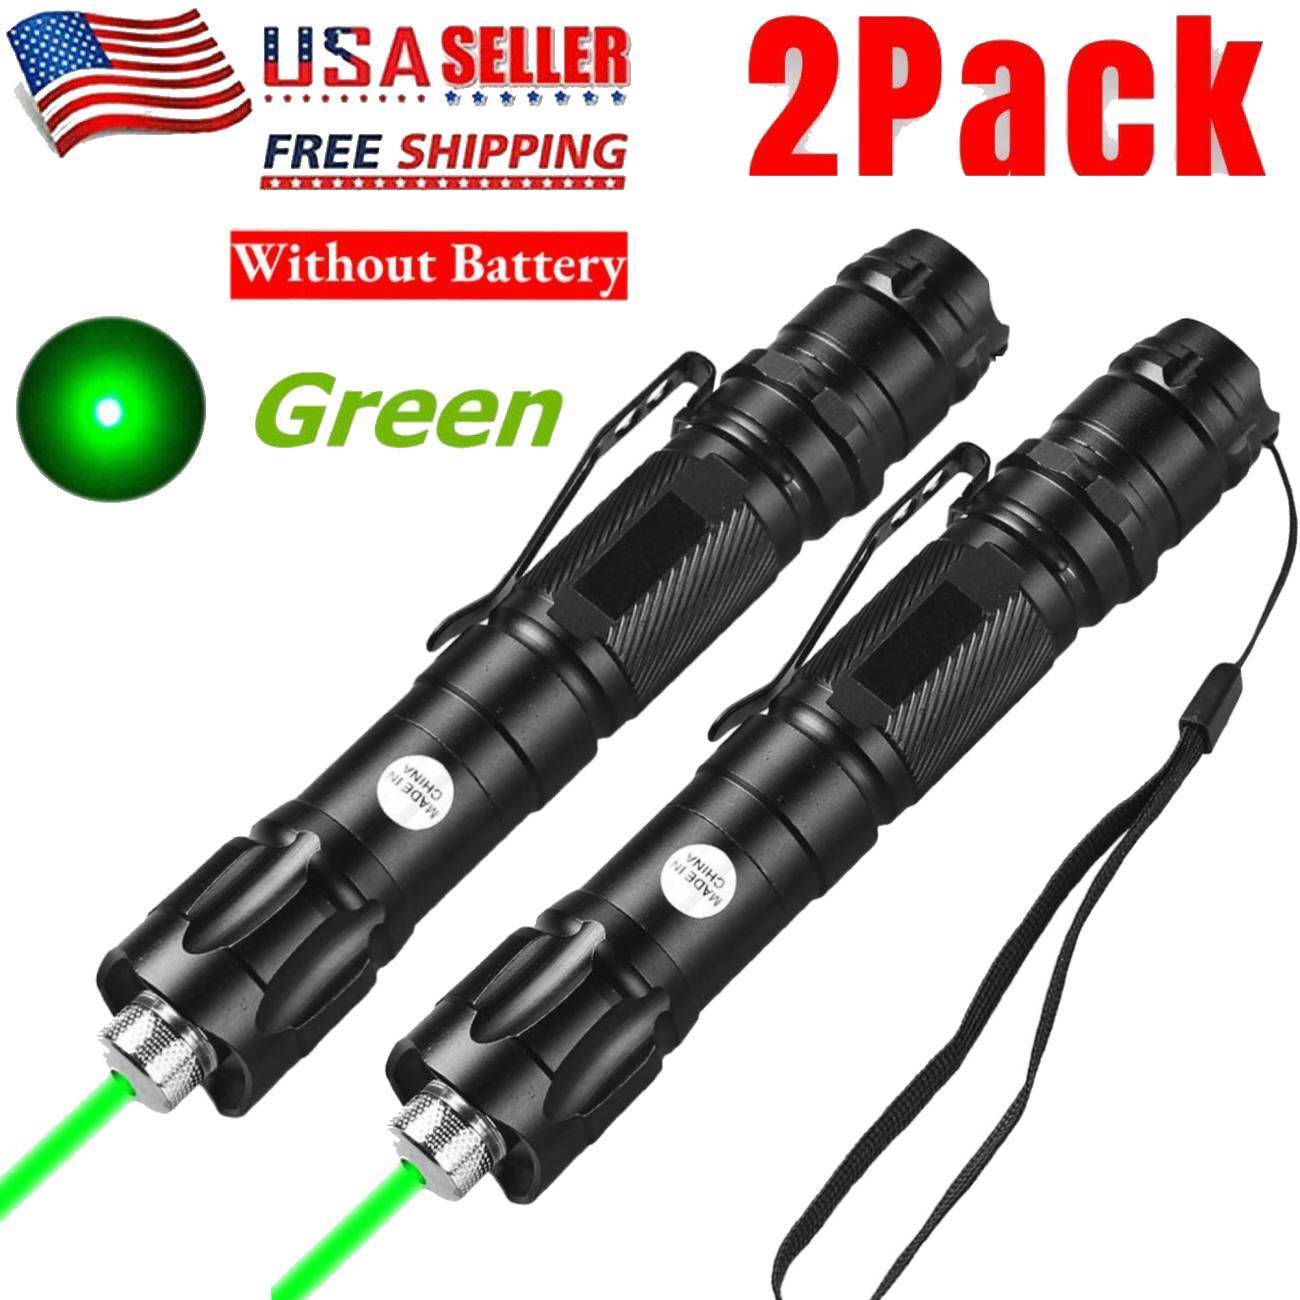 2Pack 6000Miles High Power Green Laser Pointer Pen Star Visible Beam 532nm Lazer